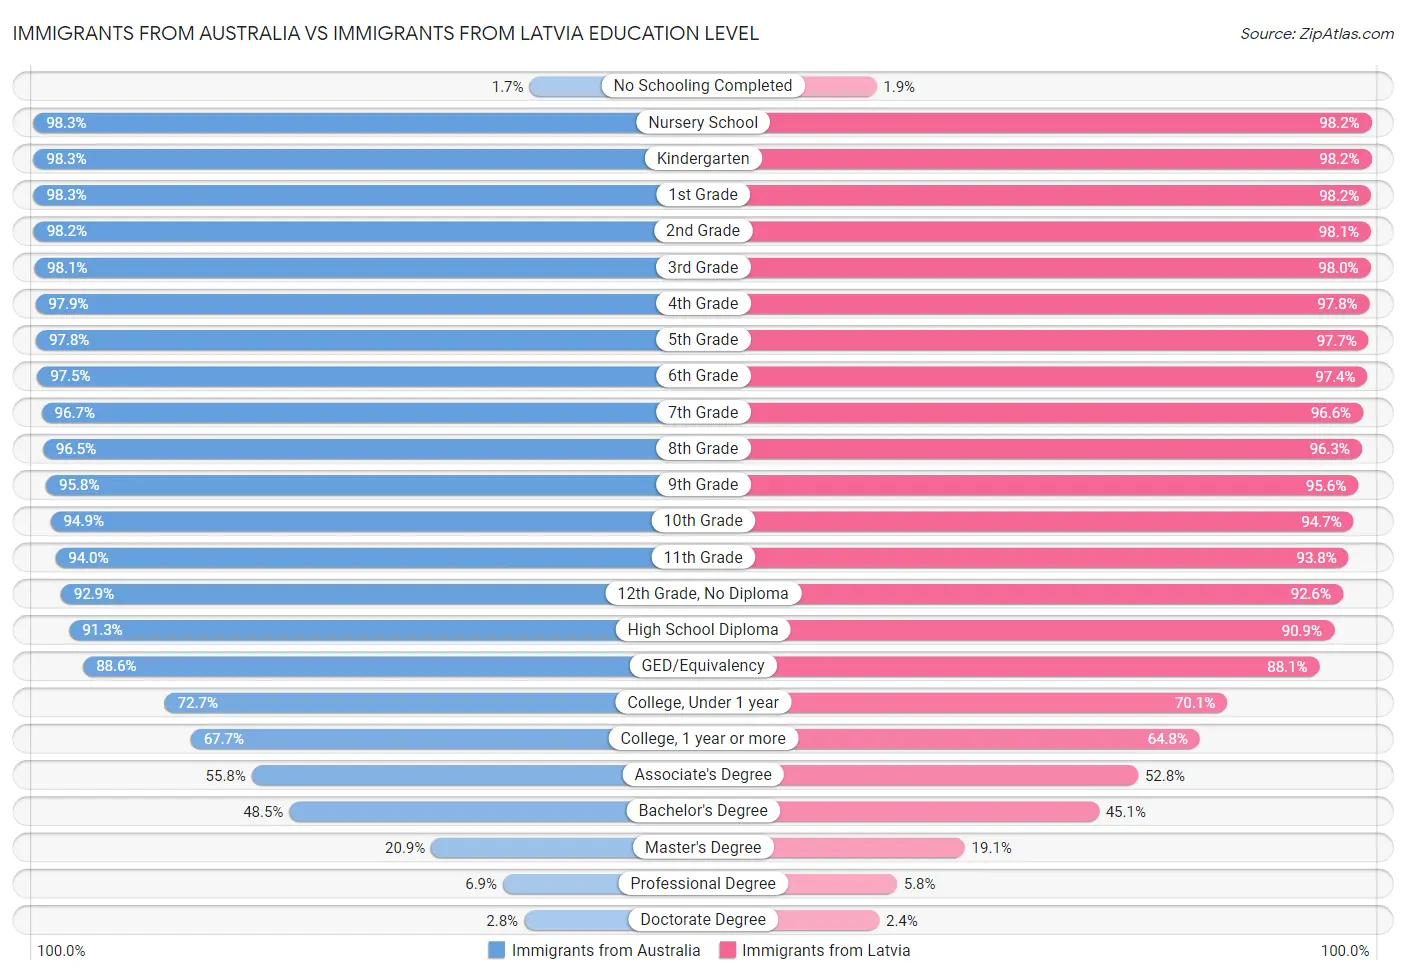 Immigrants from Australia vs Immigrants from Latvia Education Level